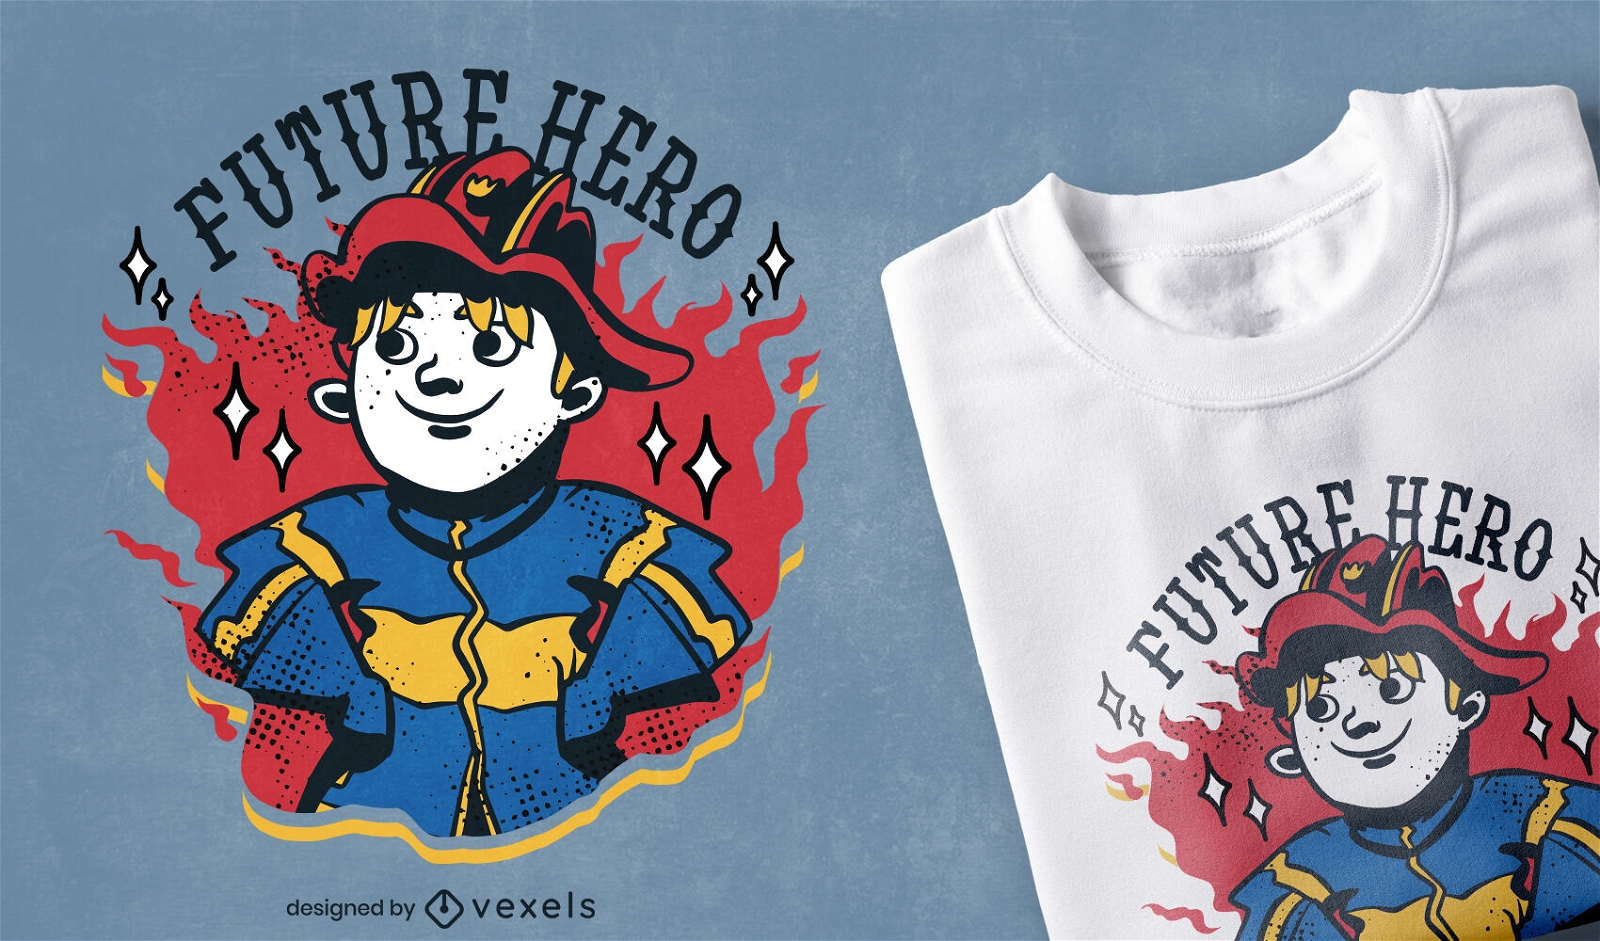 Diseño de camiseta de bombero futuro héroe.